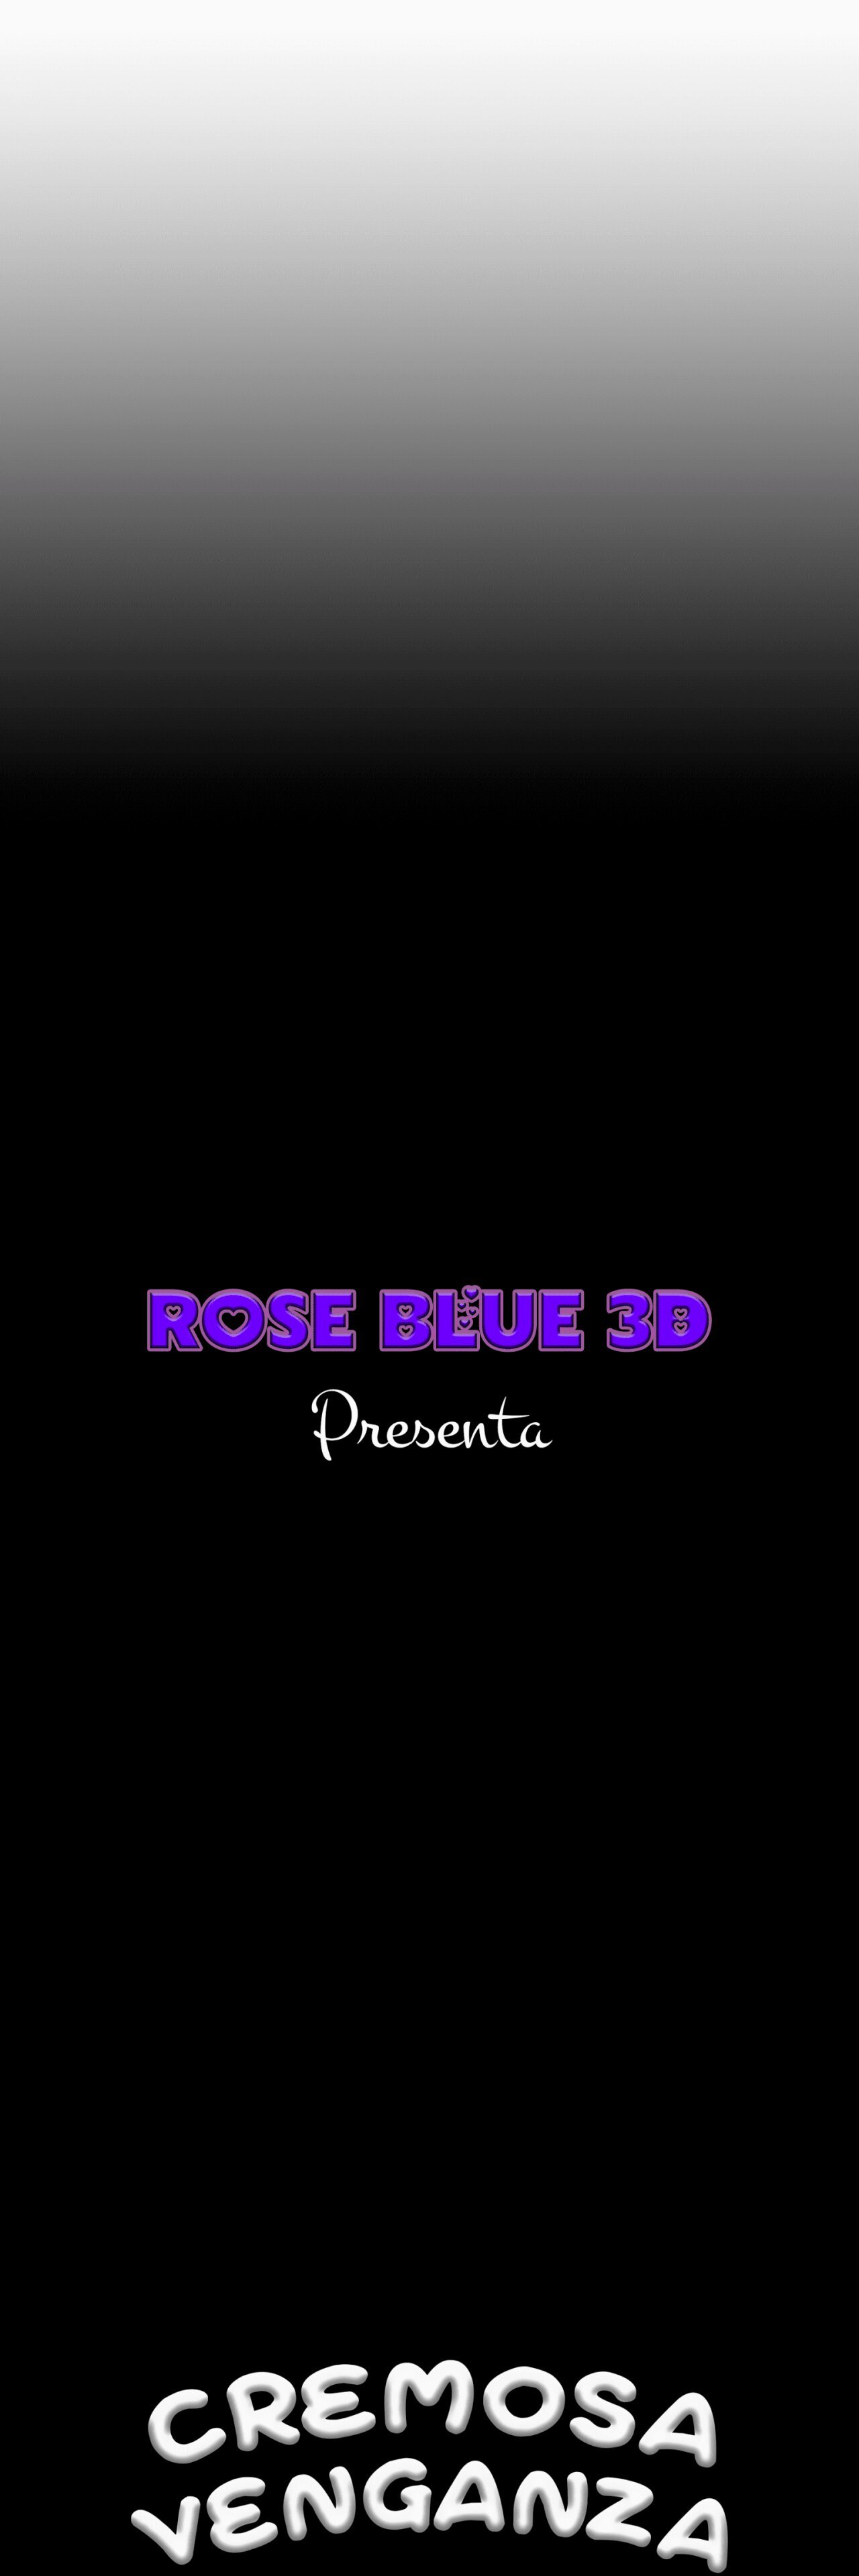 Cremosa venganza - Parte 1 - Artista Rose Blue 3D - 6